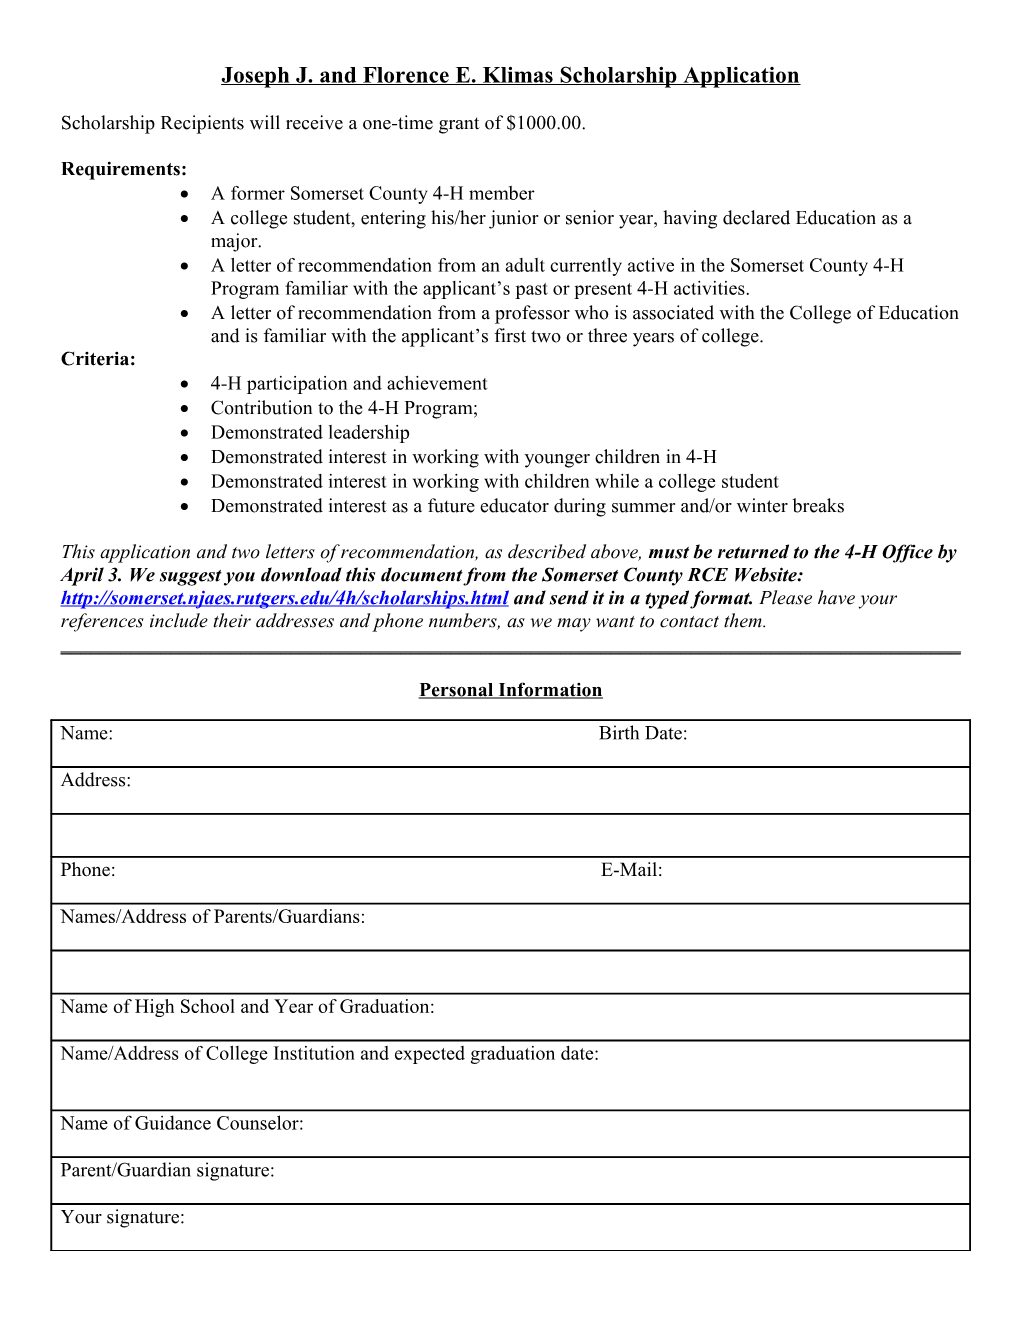 Joseph J. and Florence E. Klimas Scholarship Application